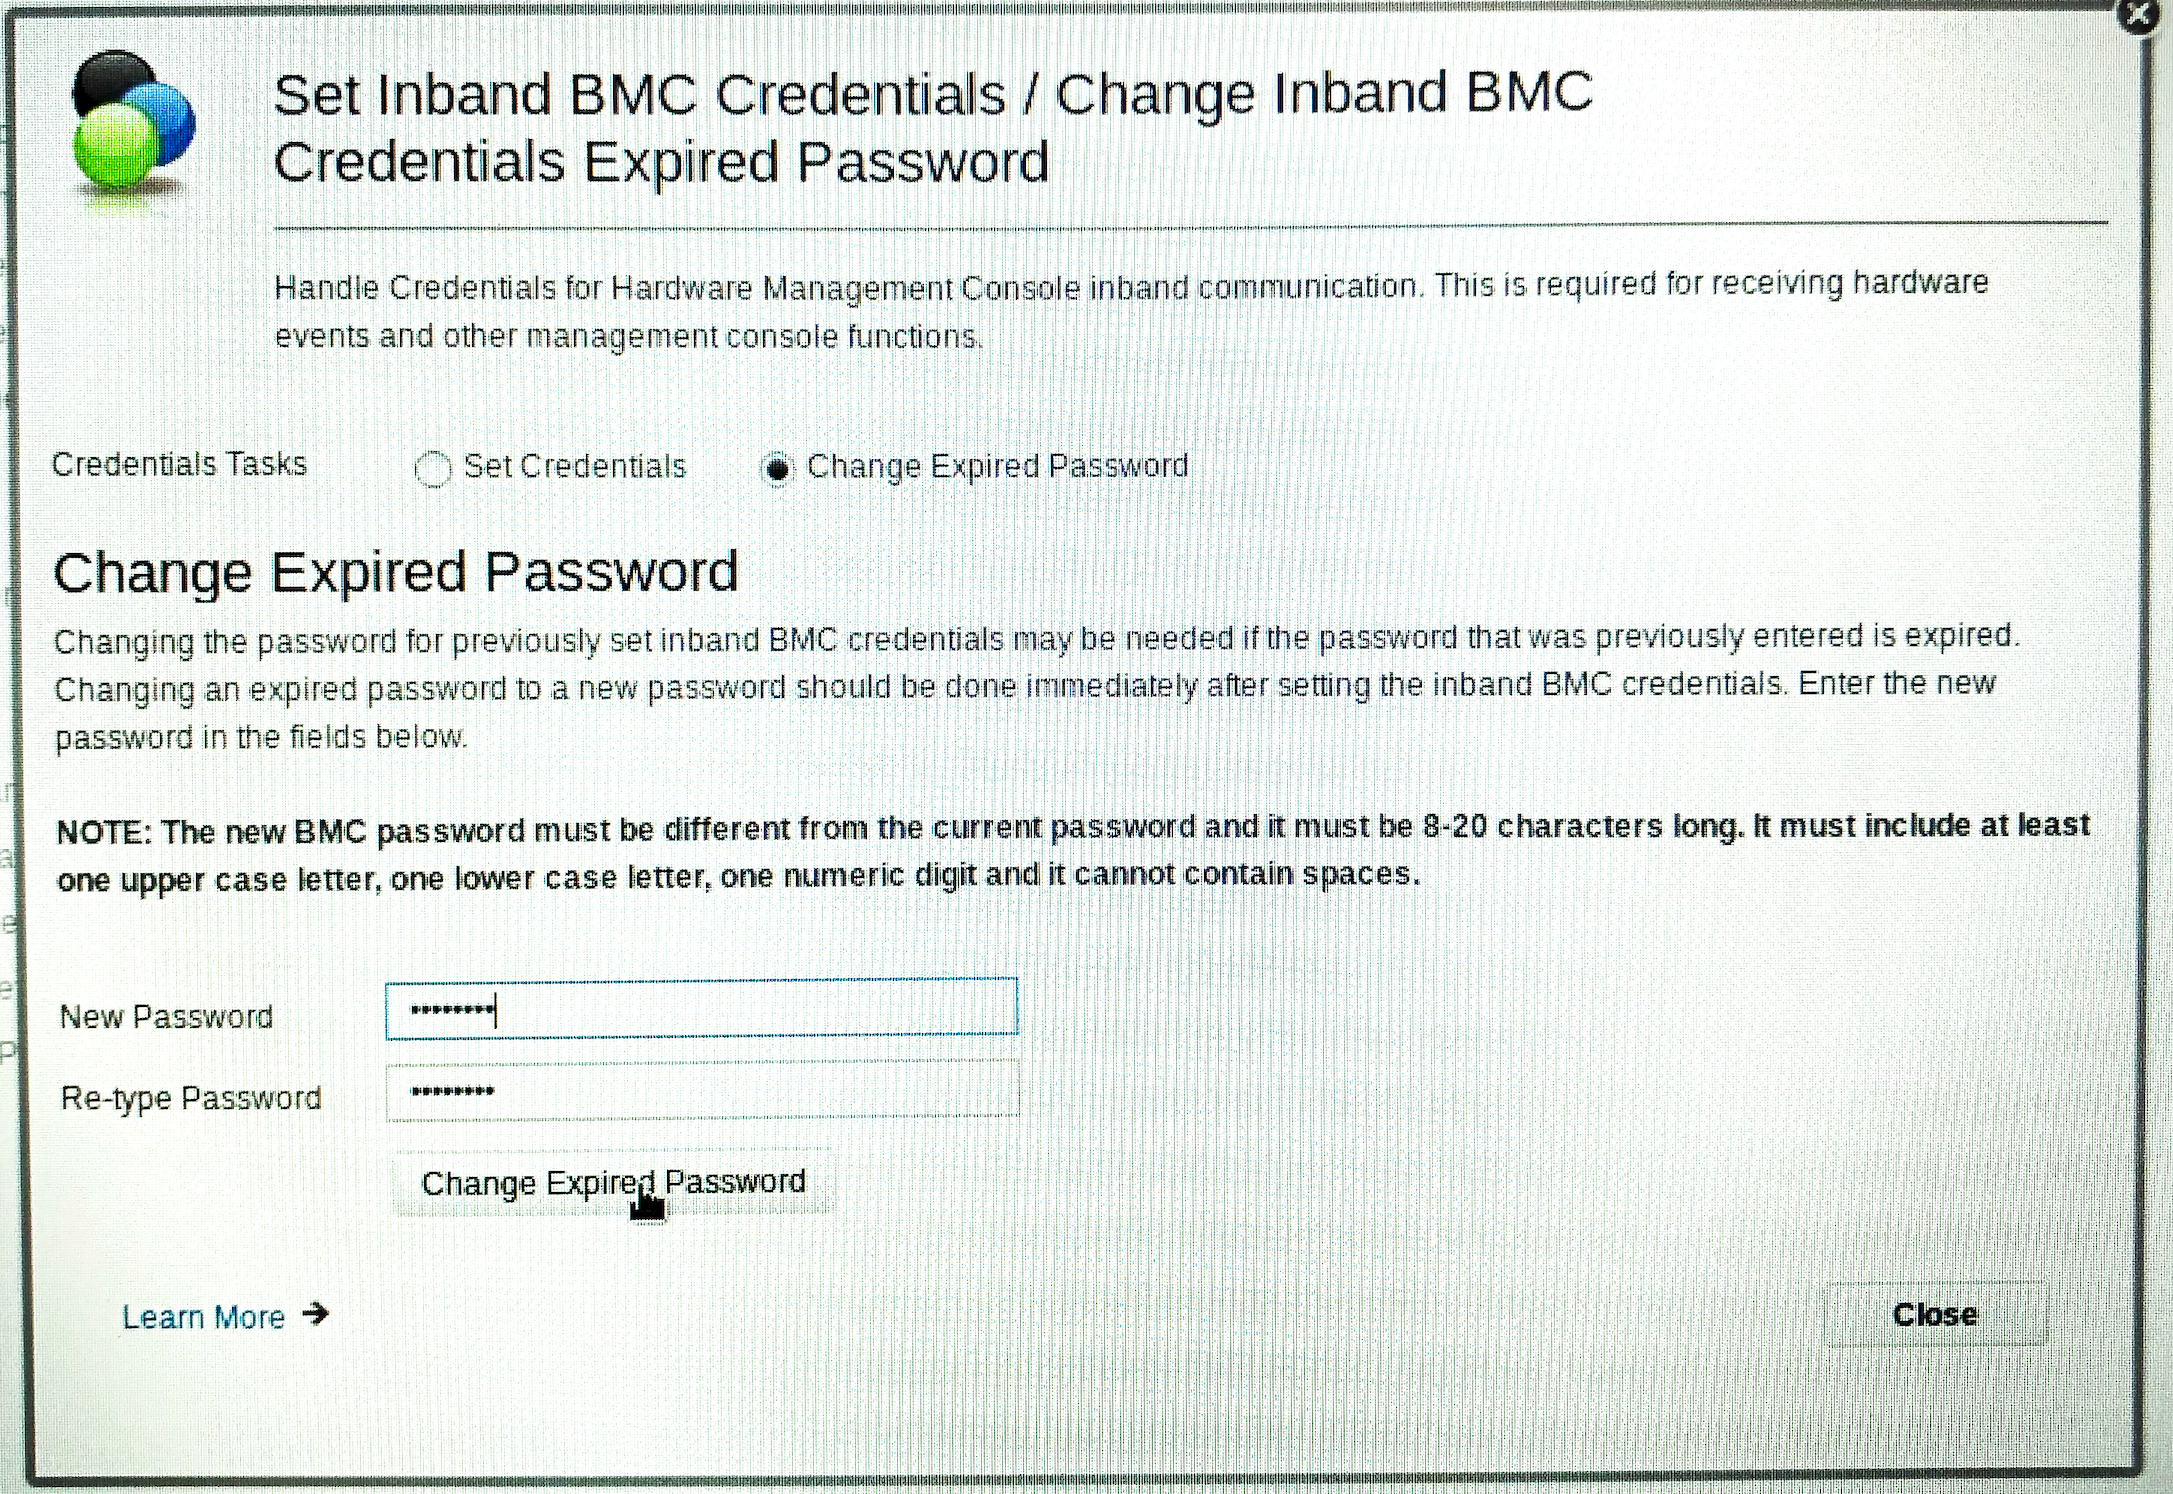 cr2 inband credentials expired set password